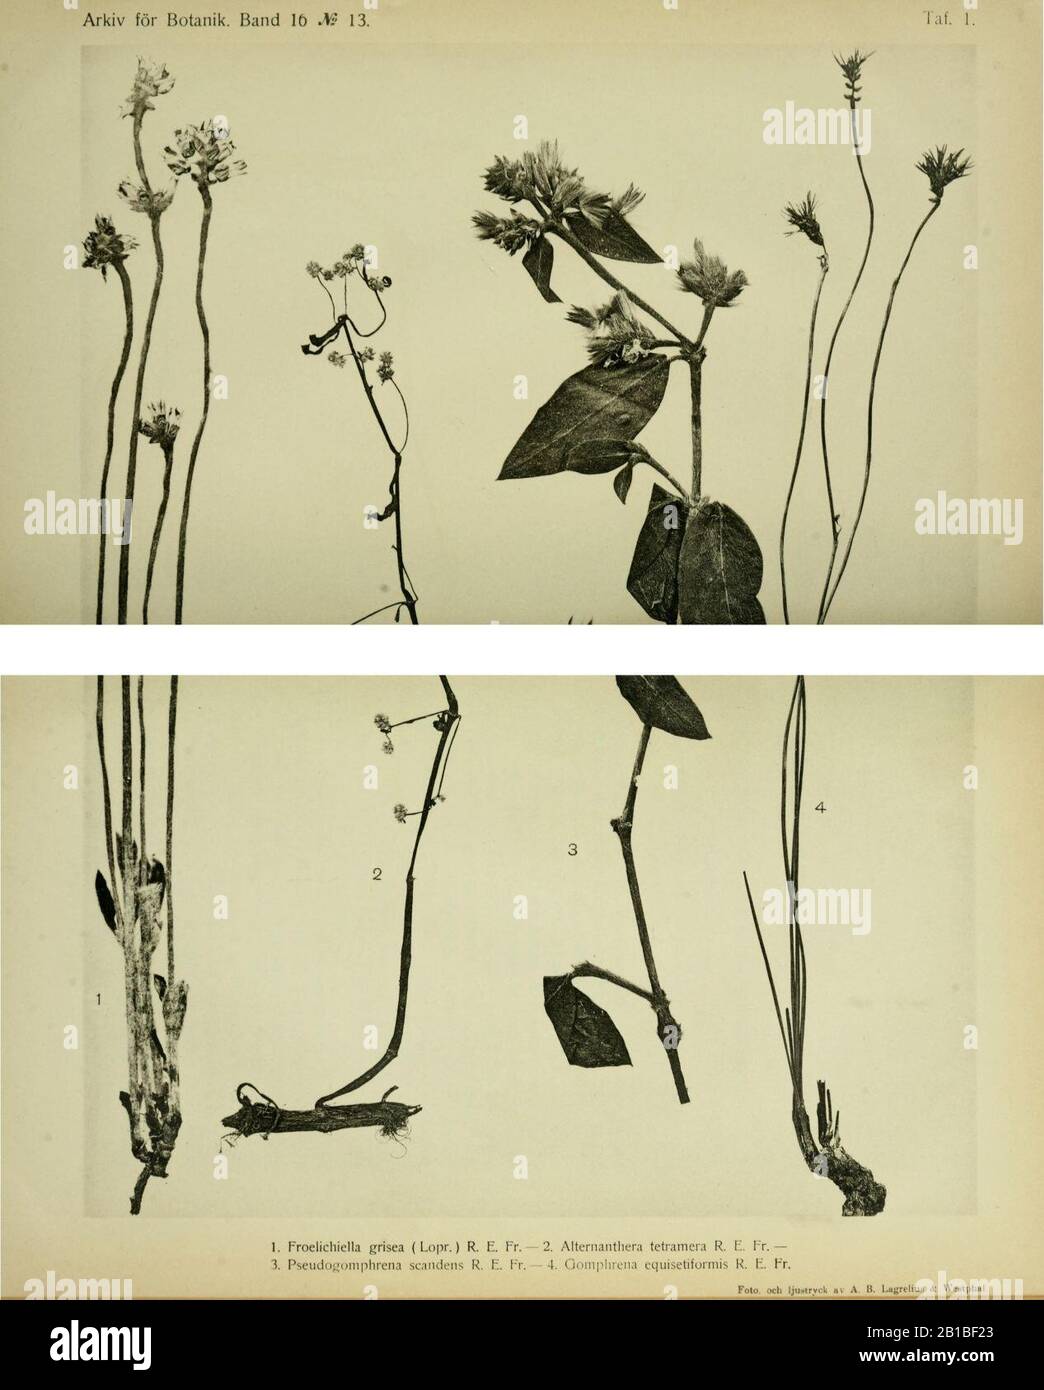 Froelichiella grisea, Alternanthera tetramera, Pseudogomphrena scandens, Gomphrena equisetiformis. Stock Photo